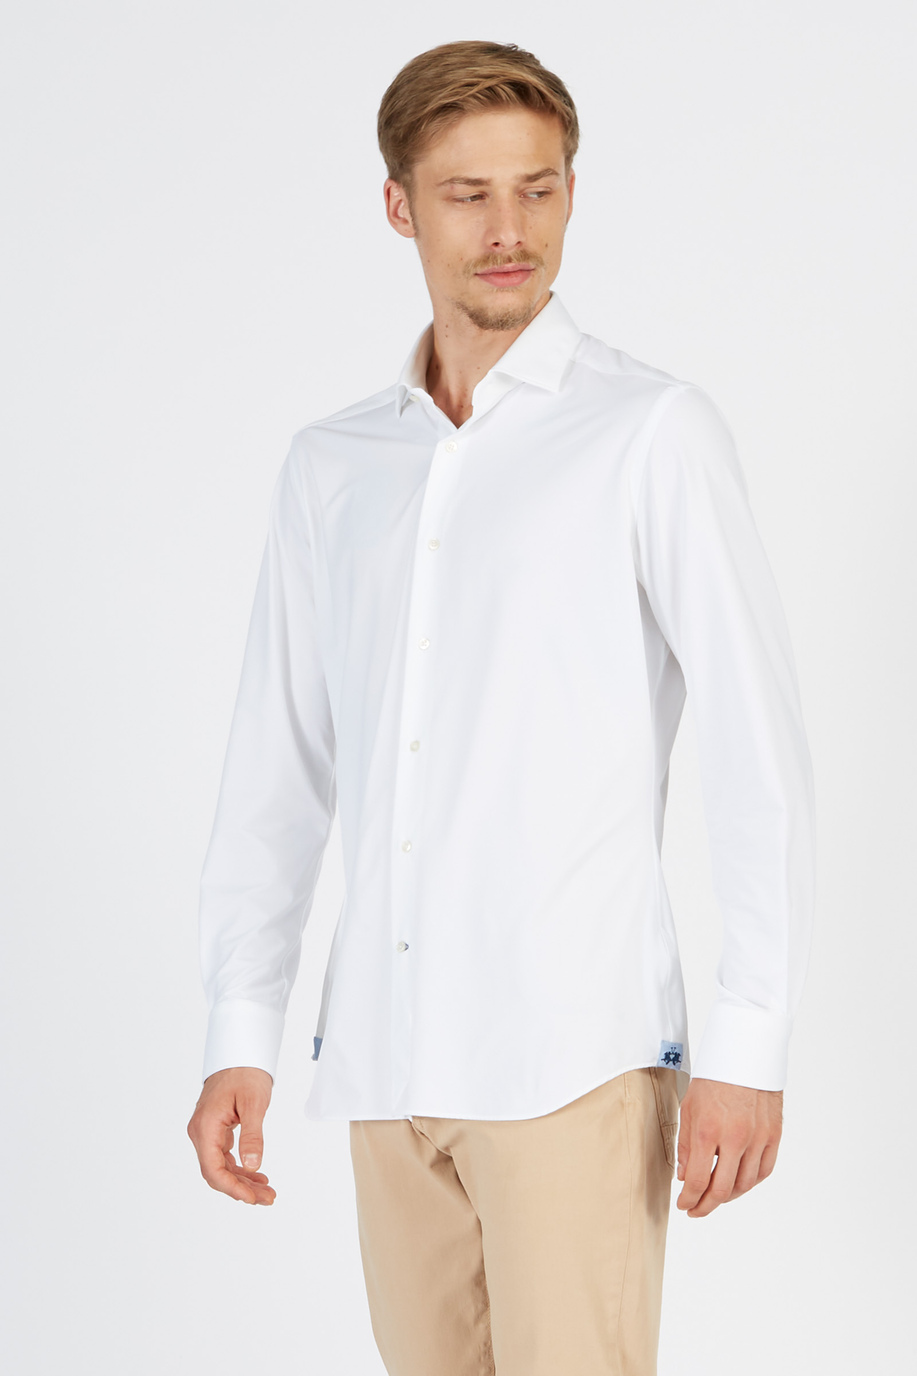 Chemise homme tissu synthétique manches longues coupe custom - Chemises | La Martina - Official Online Shop